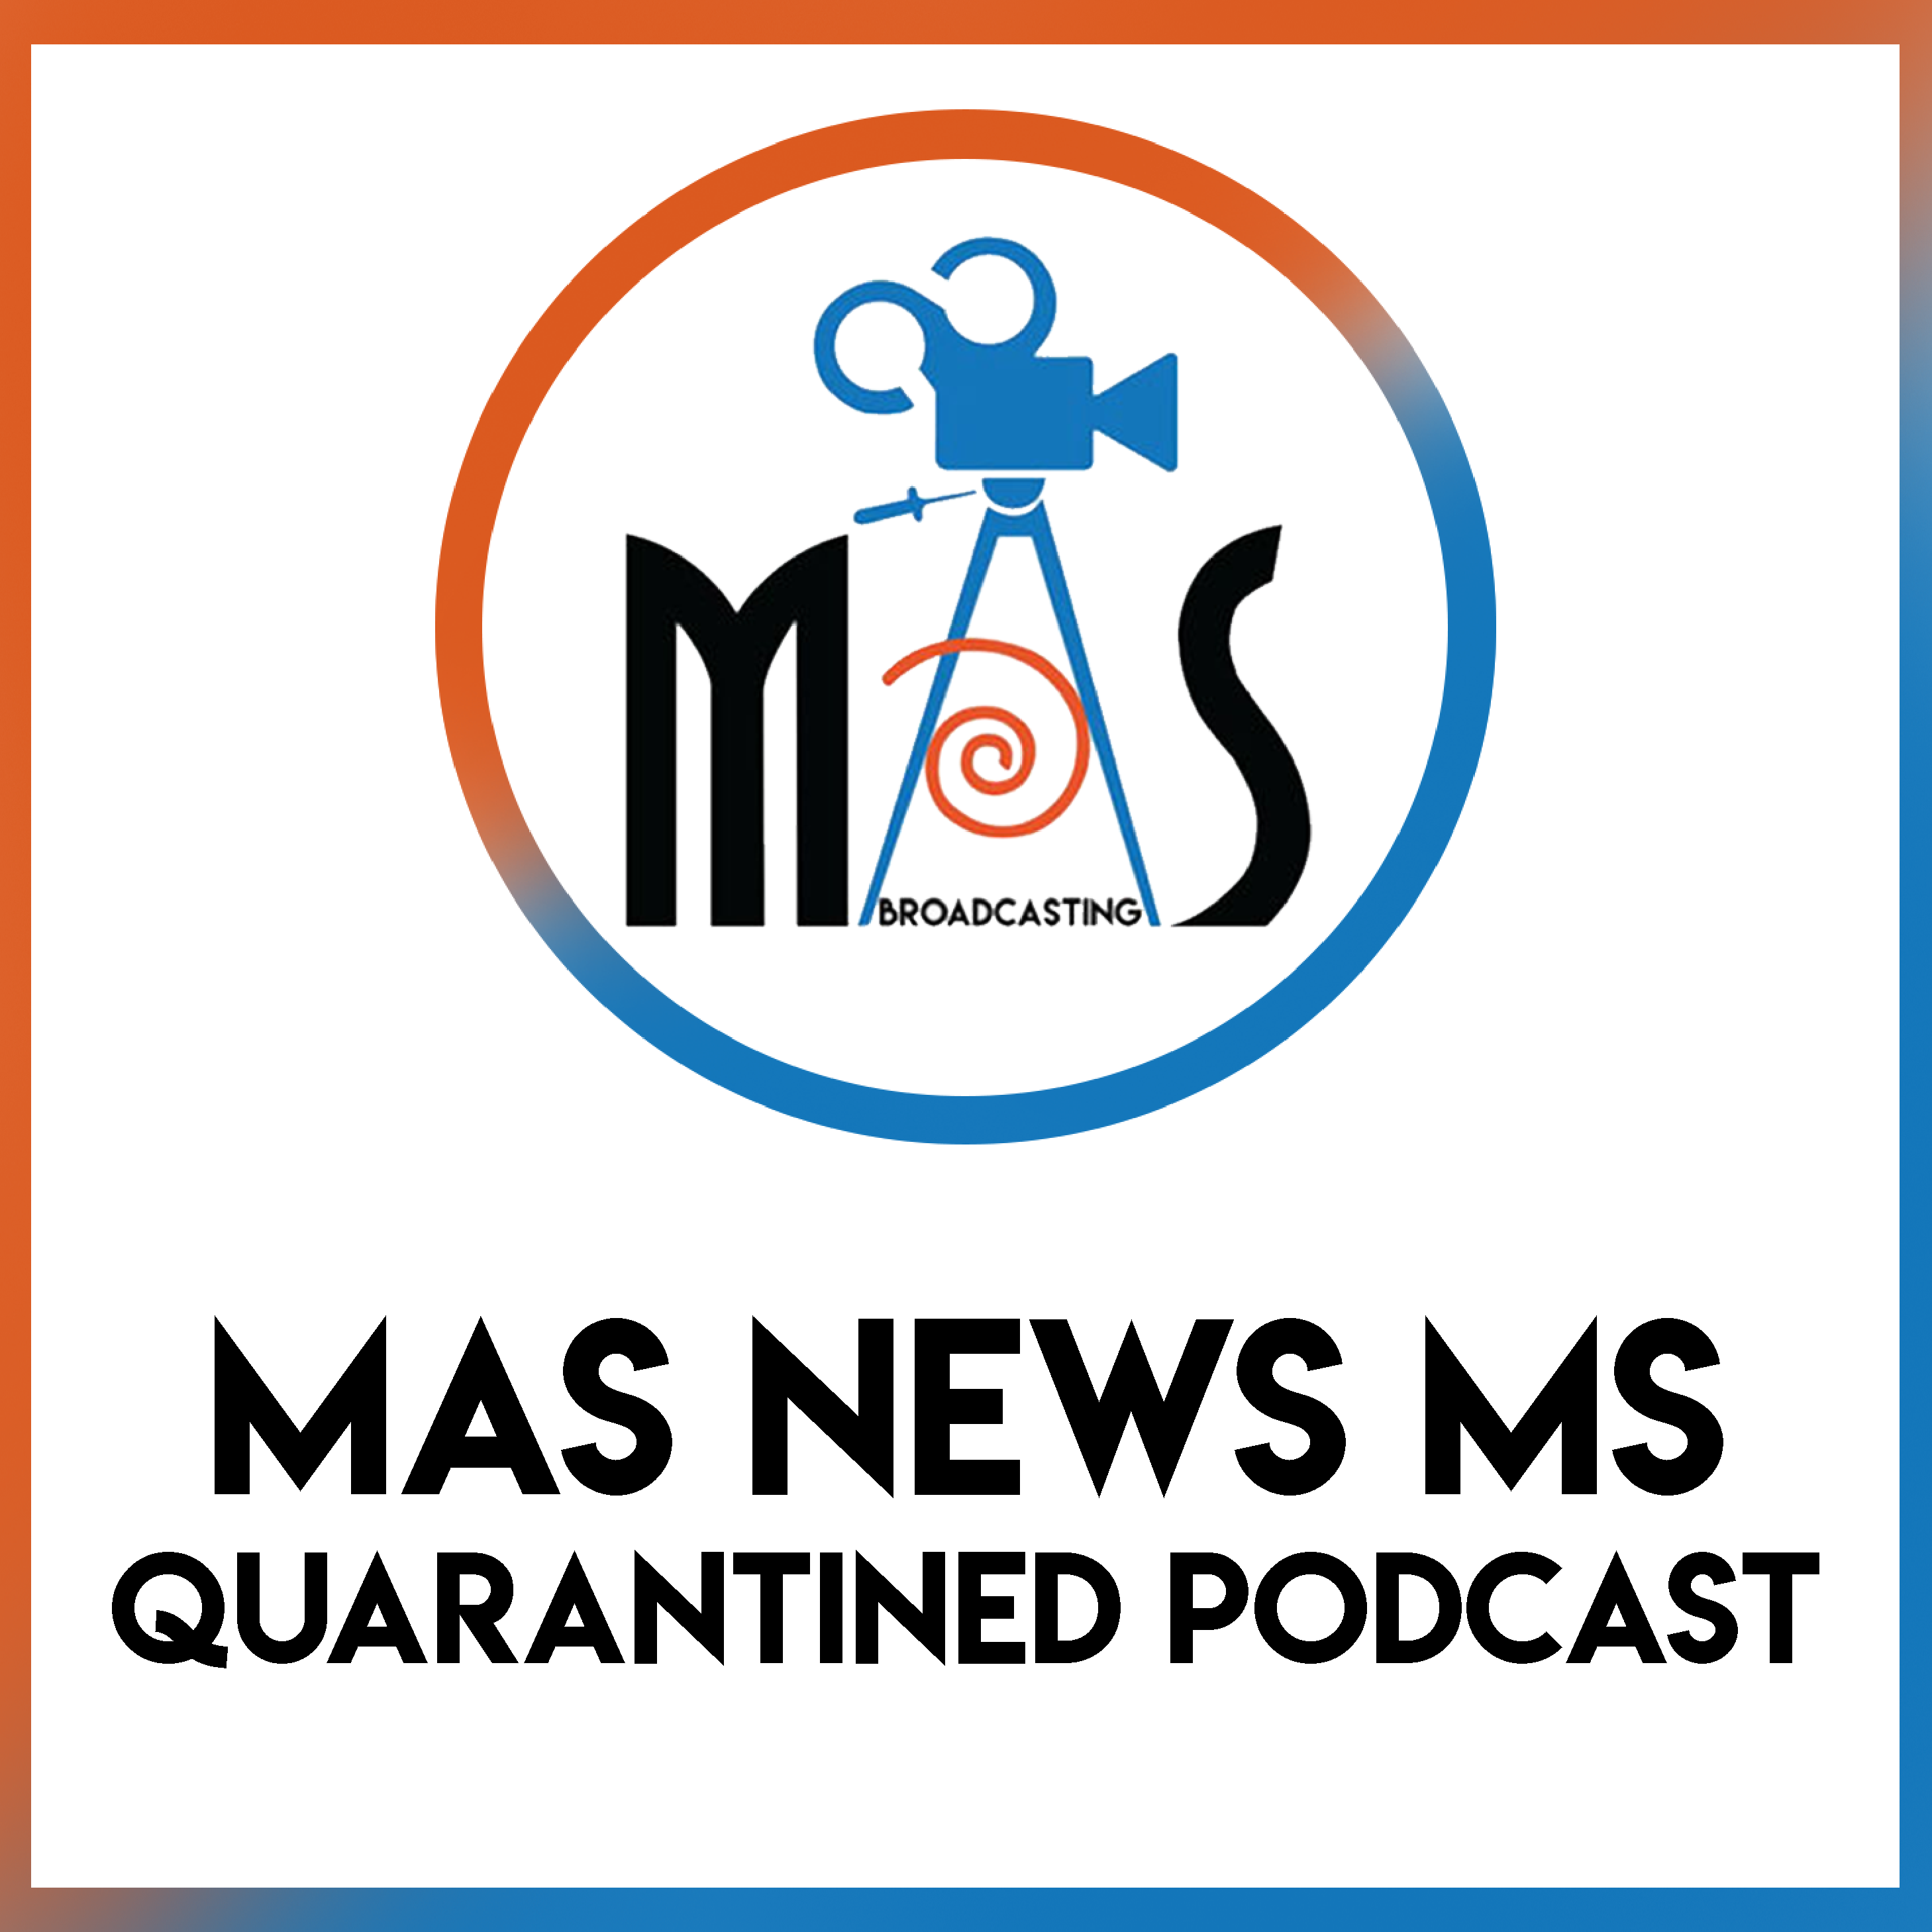 The MAS News MS Quarantined Podcast